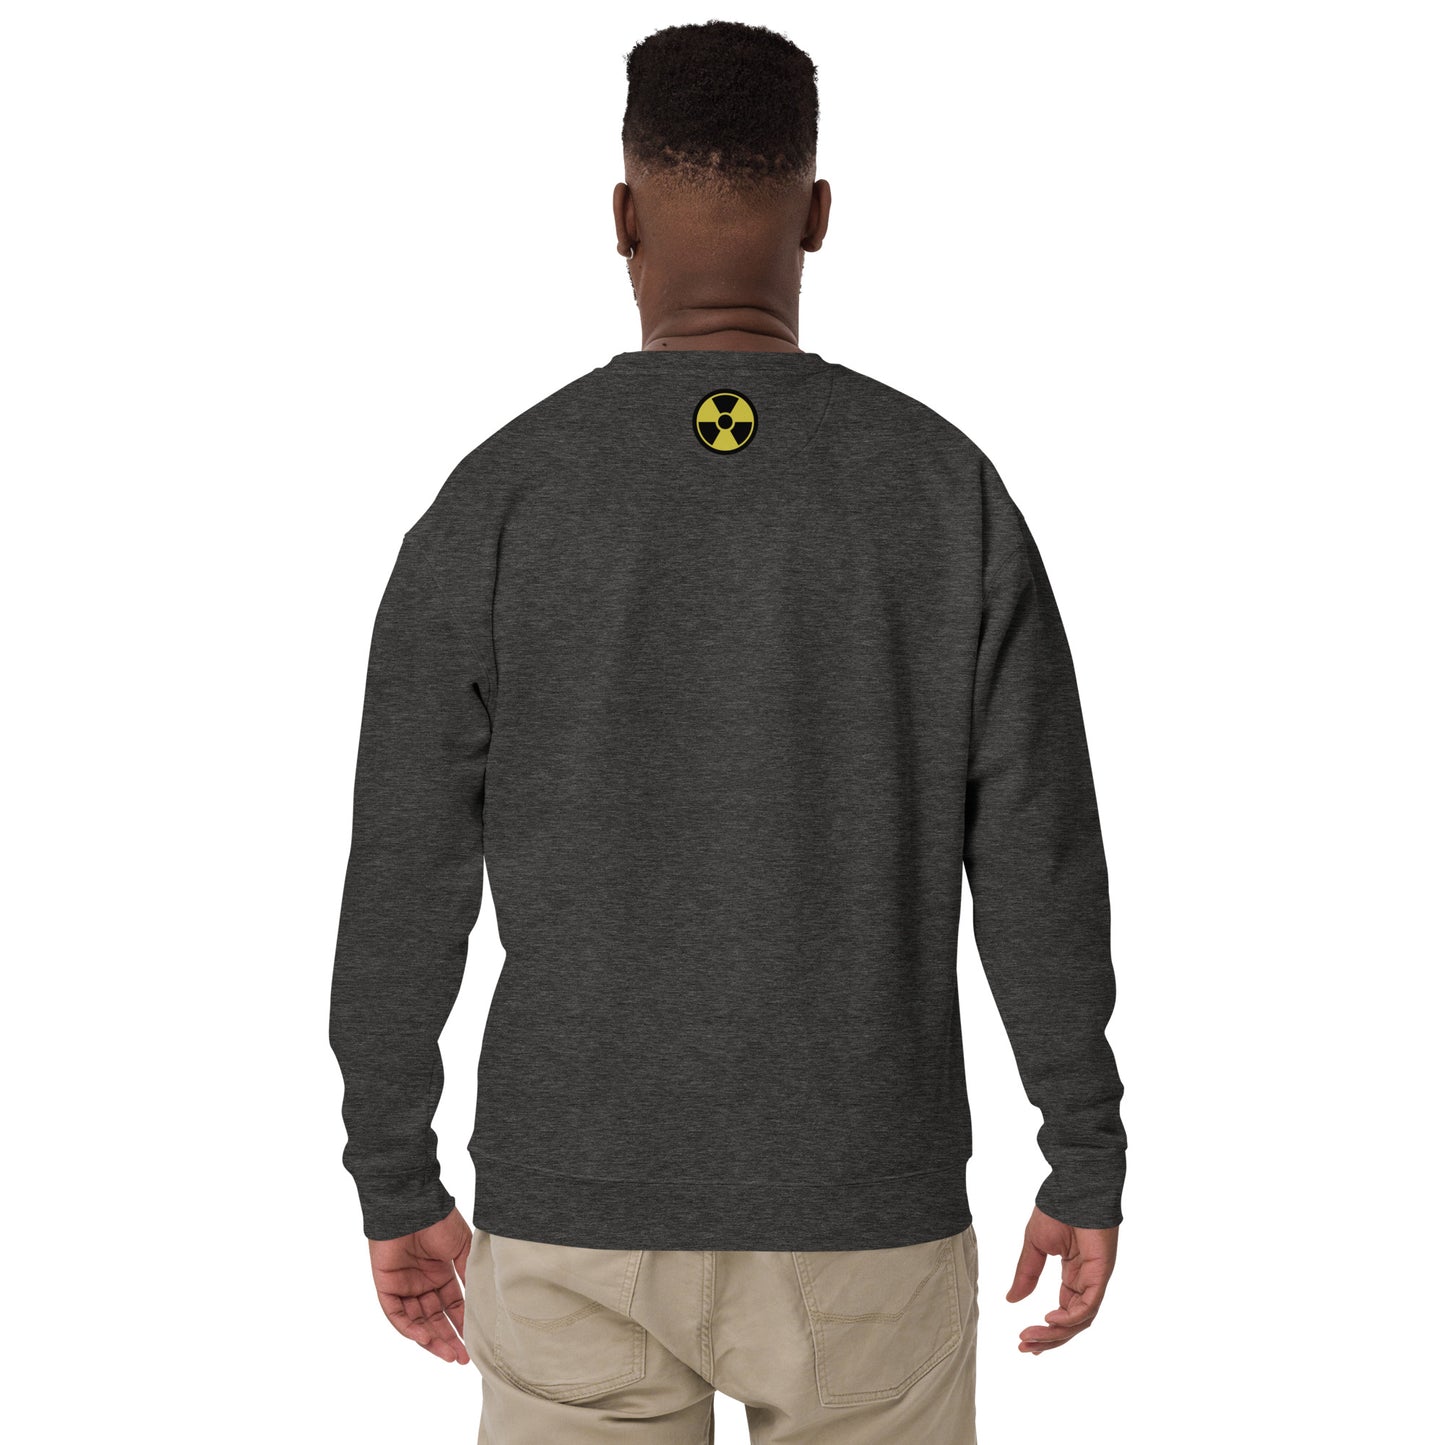 Devast unisex premium sweatshirt